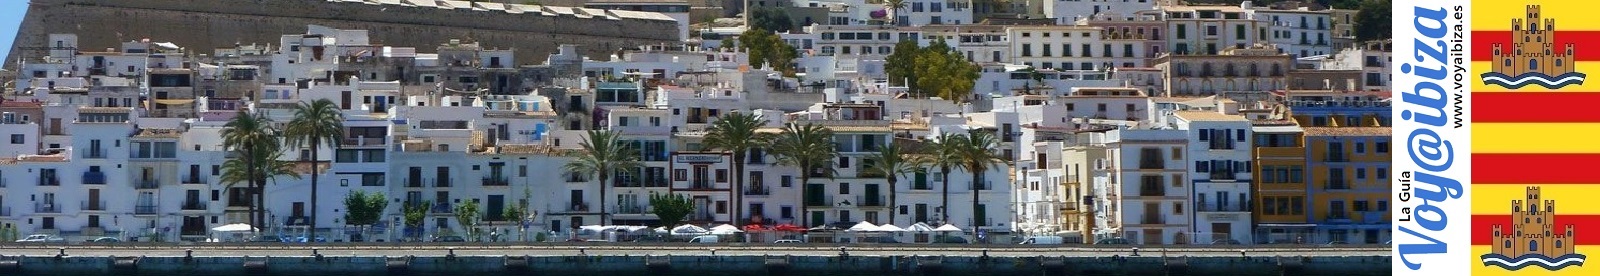 Arquitectura de Ibiza